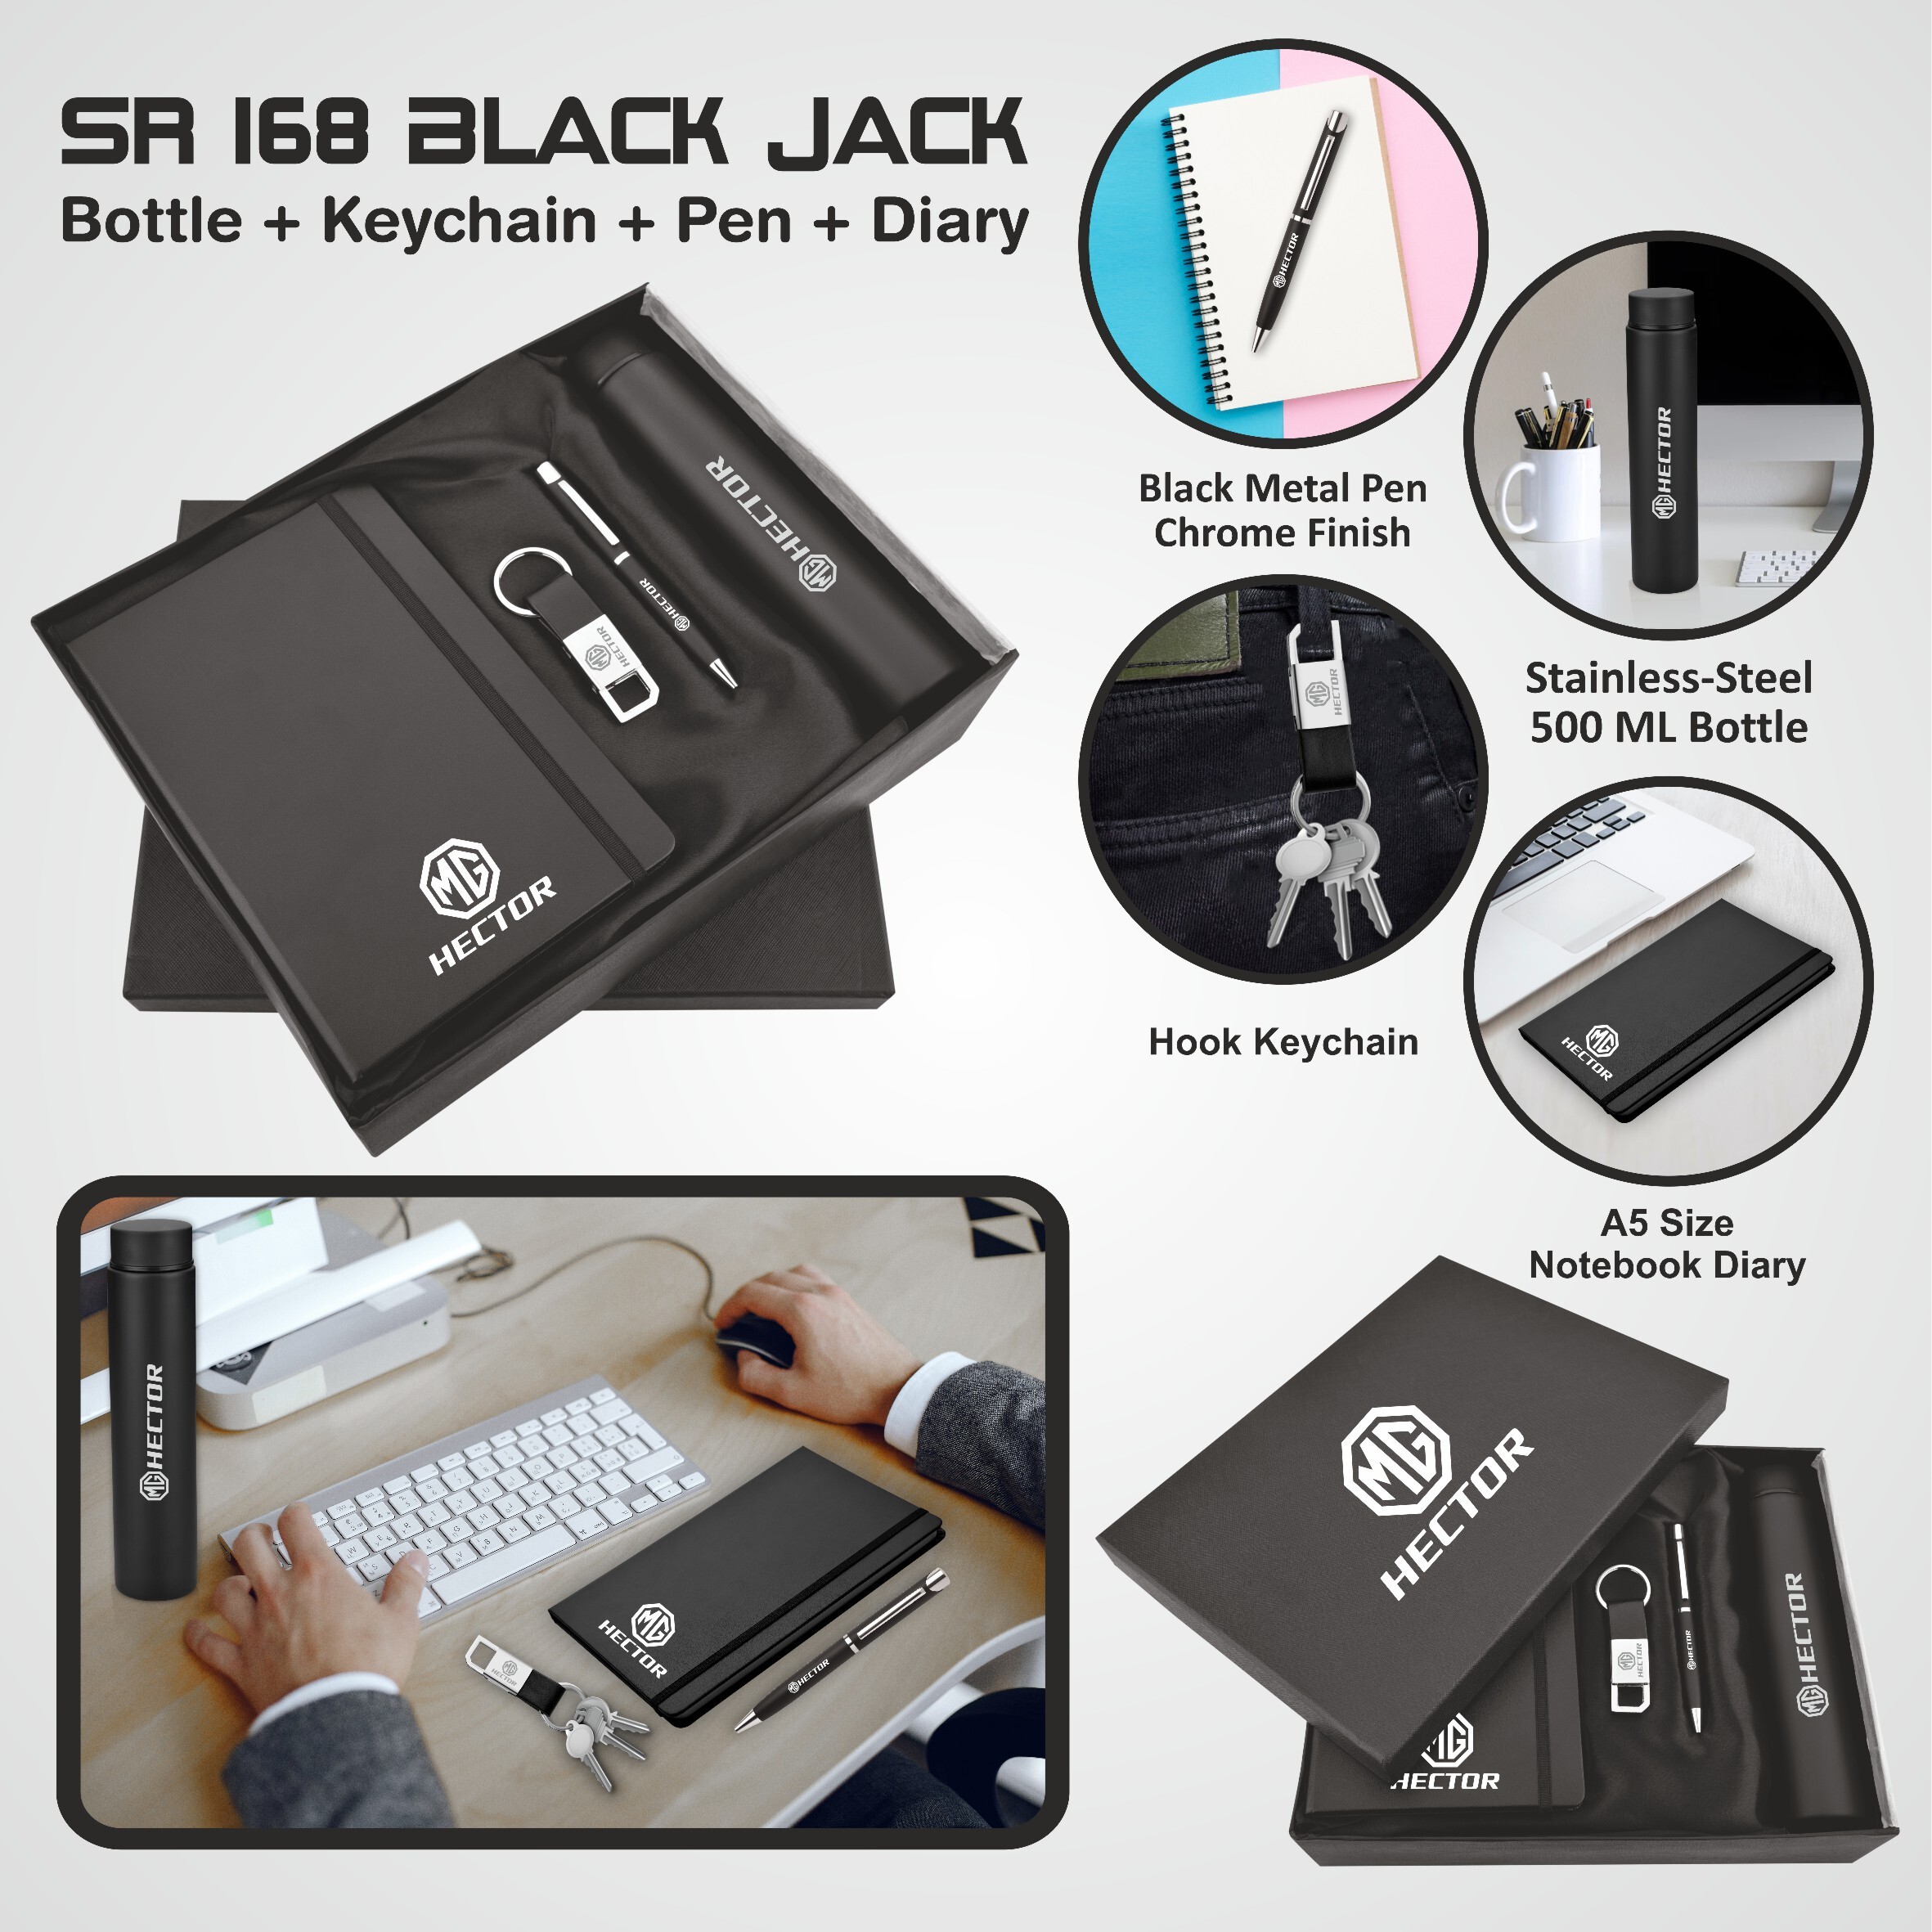 4 in 1 Pen Diary Bottle And Keychain Combo Set Sr 168 Black Jack